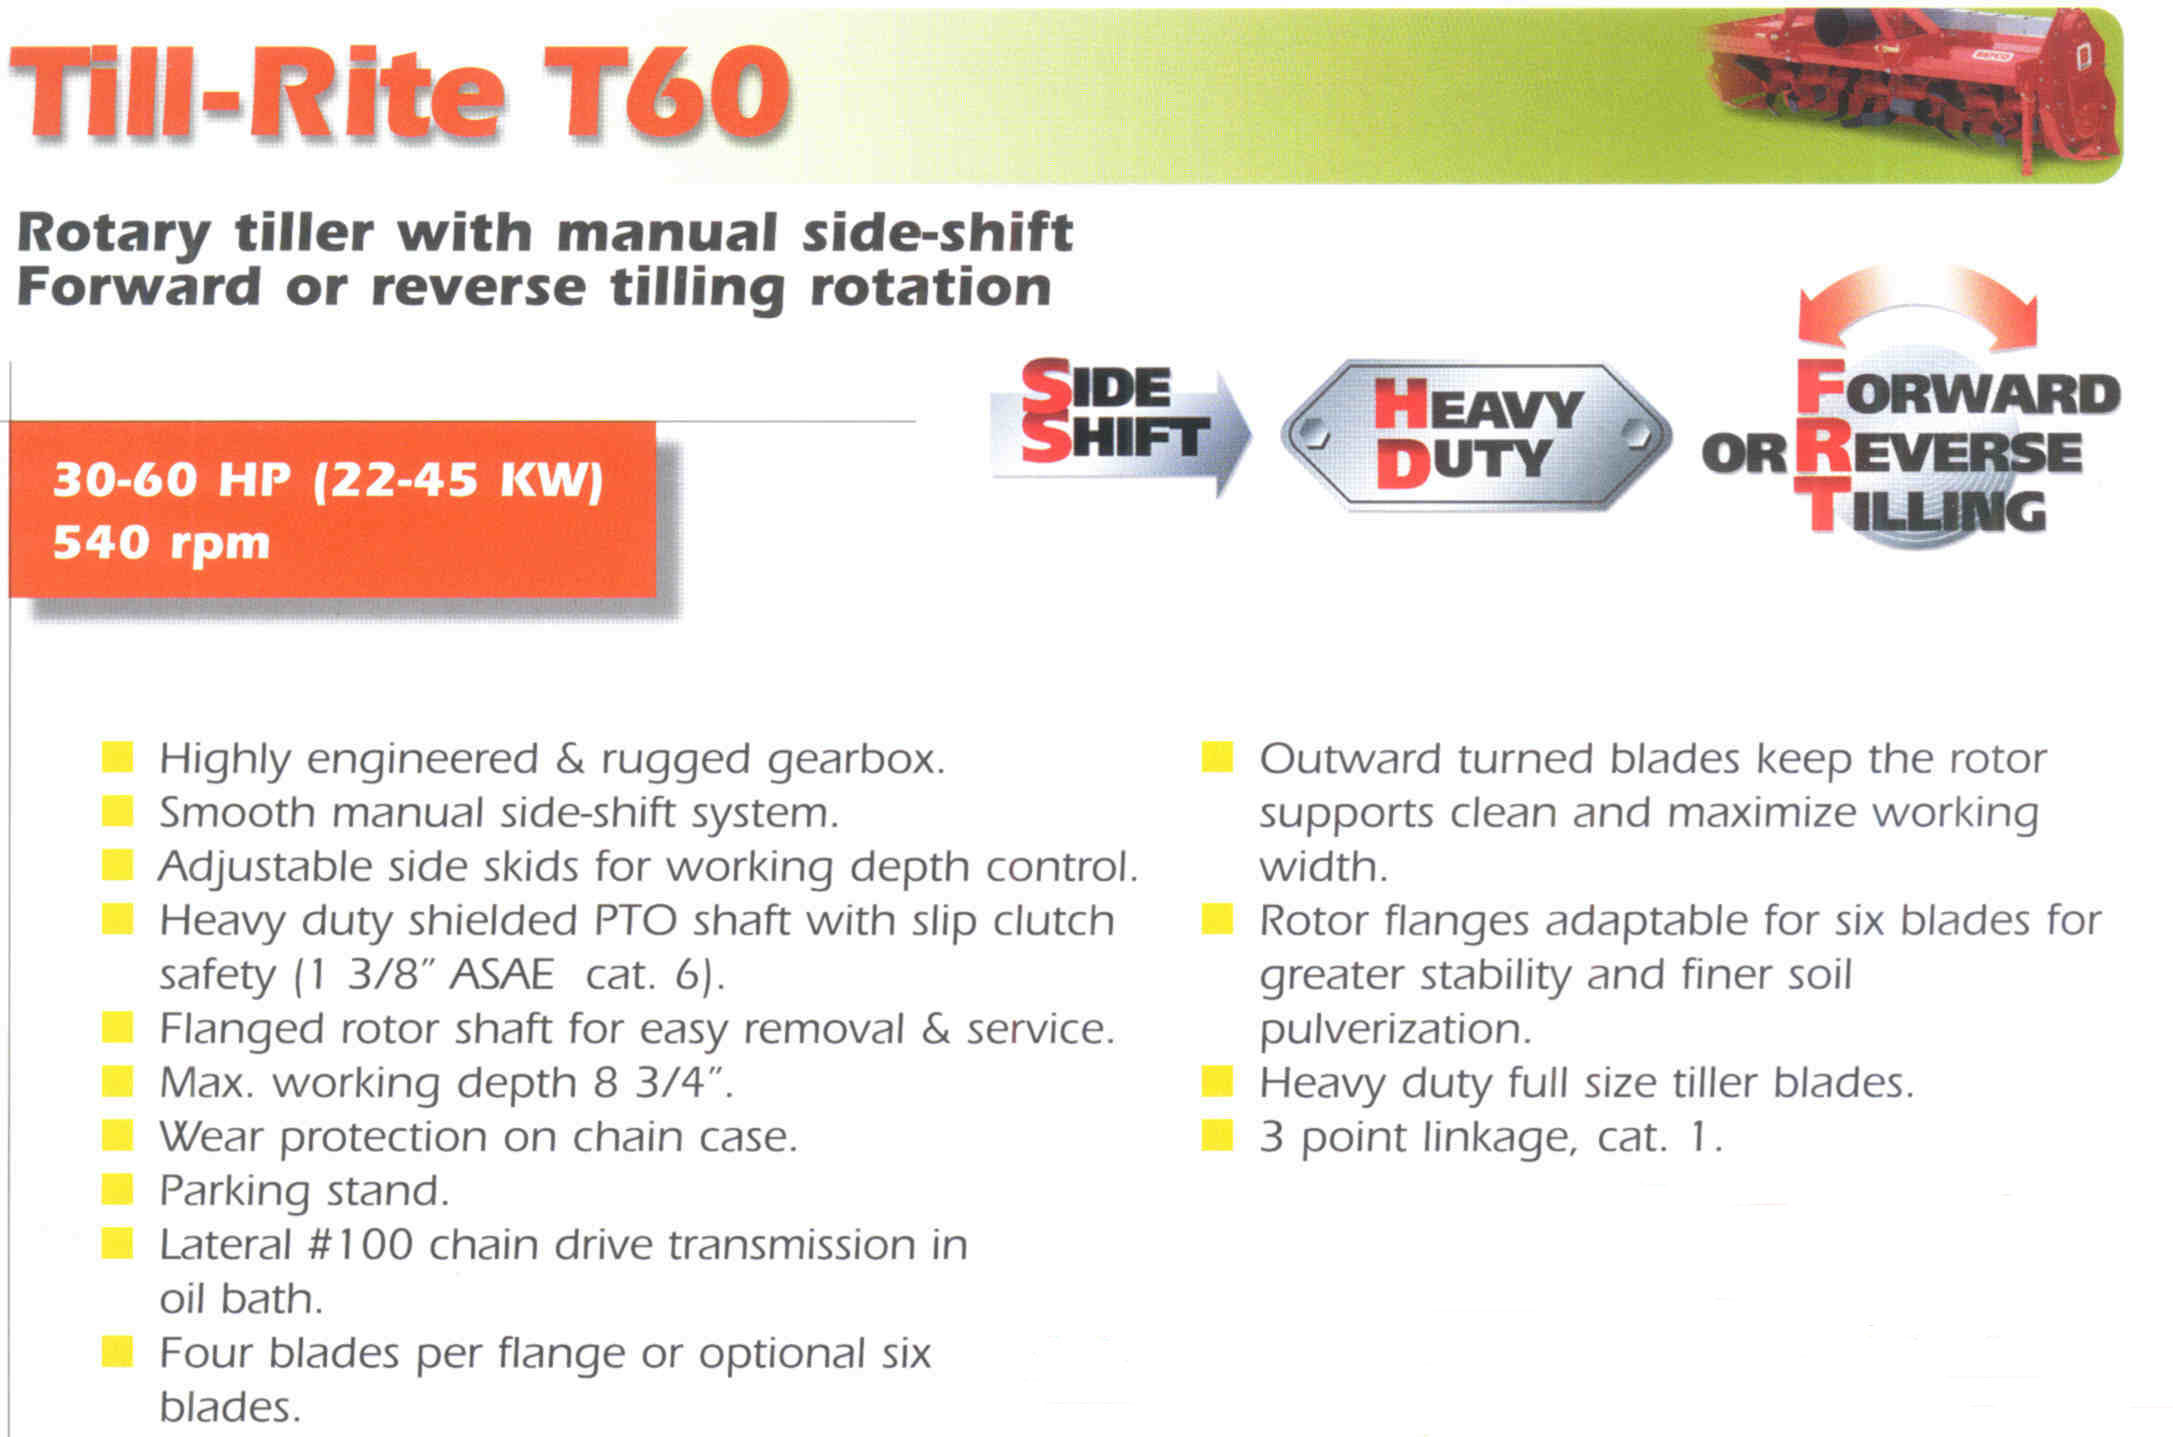 Till-Rite T60 Series Rotary Tillers